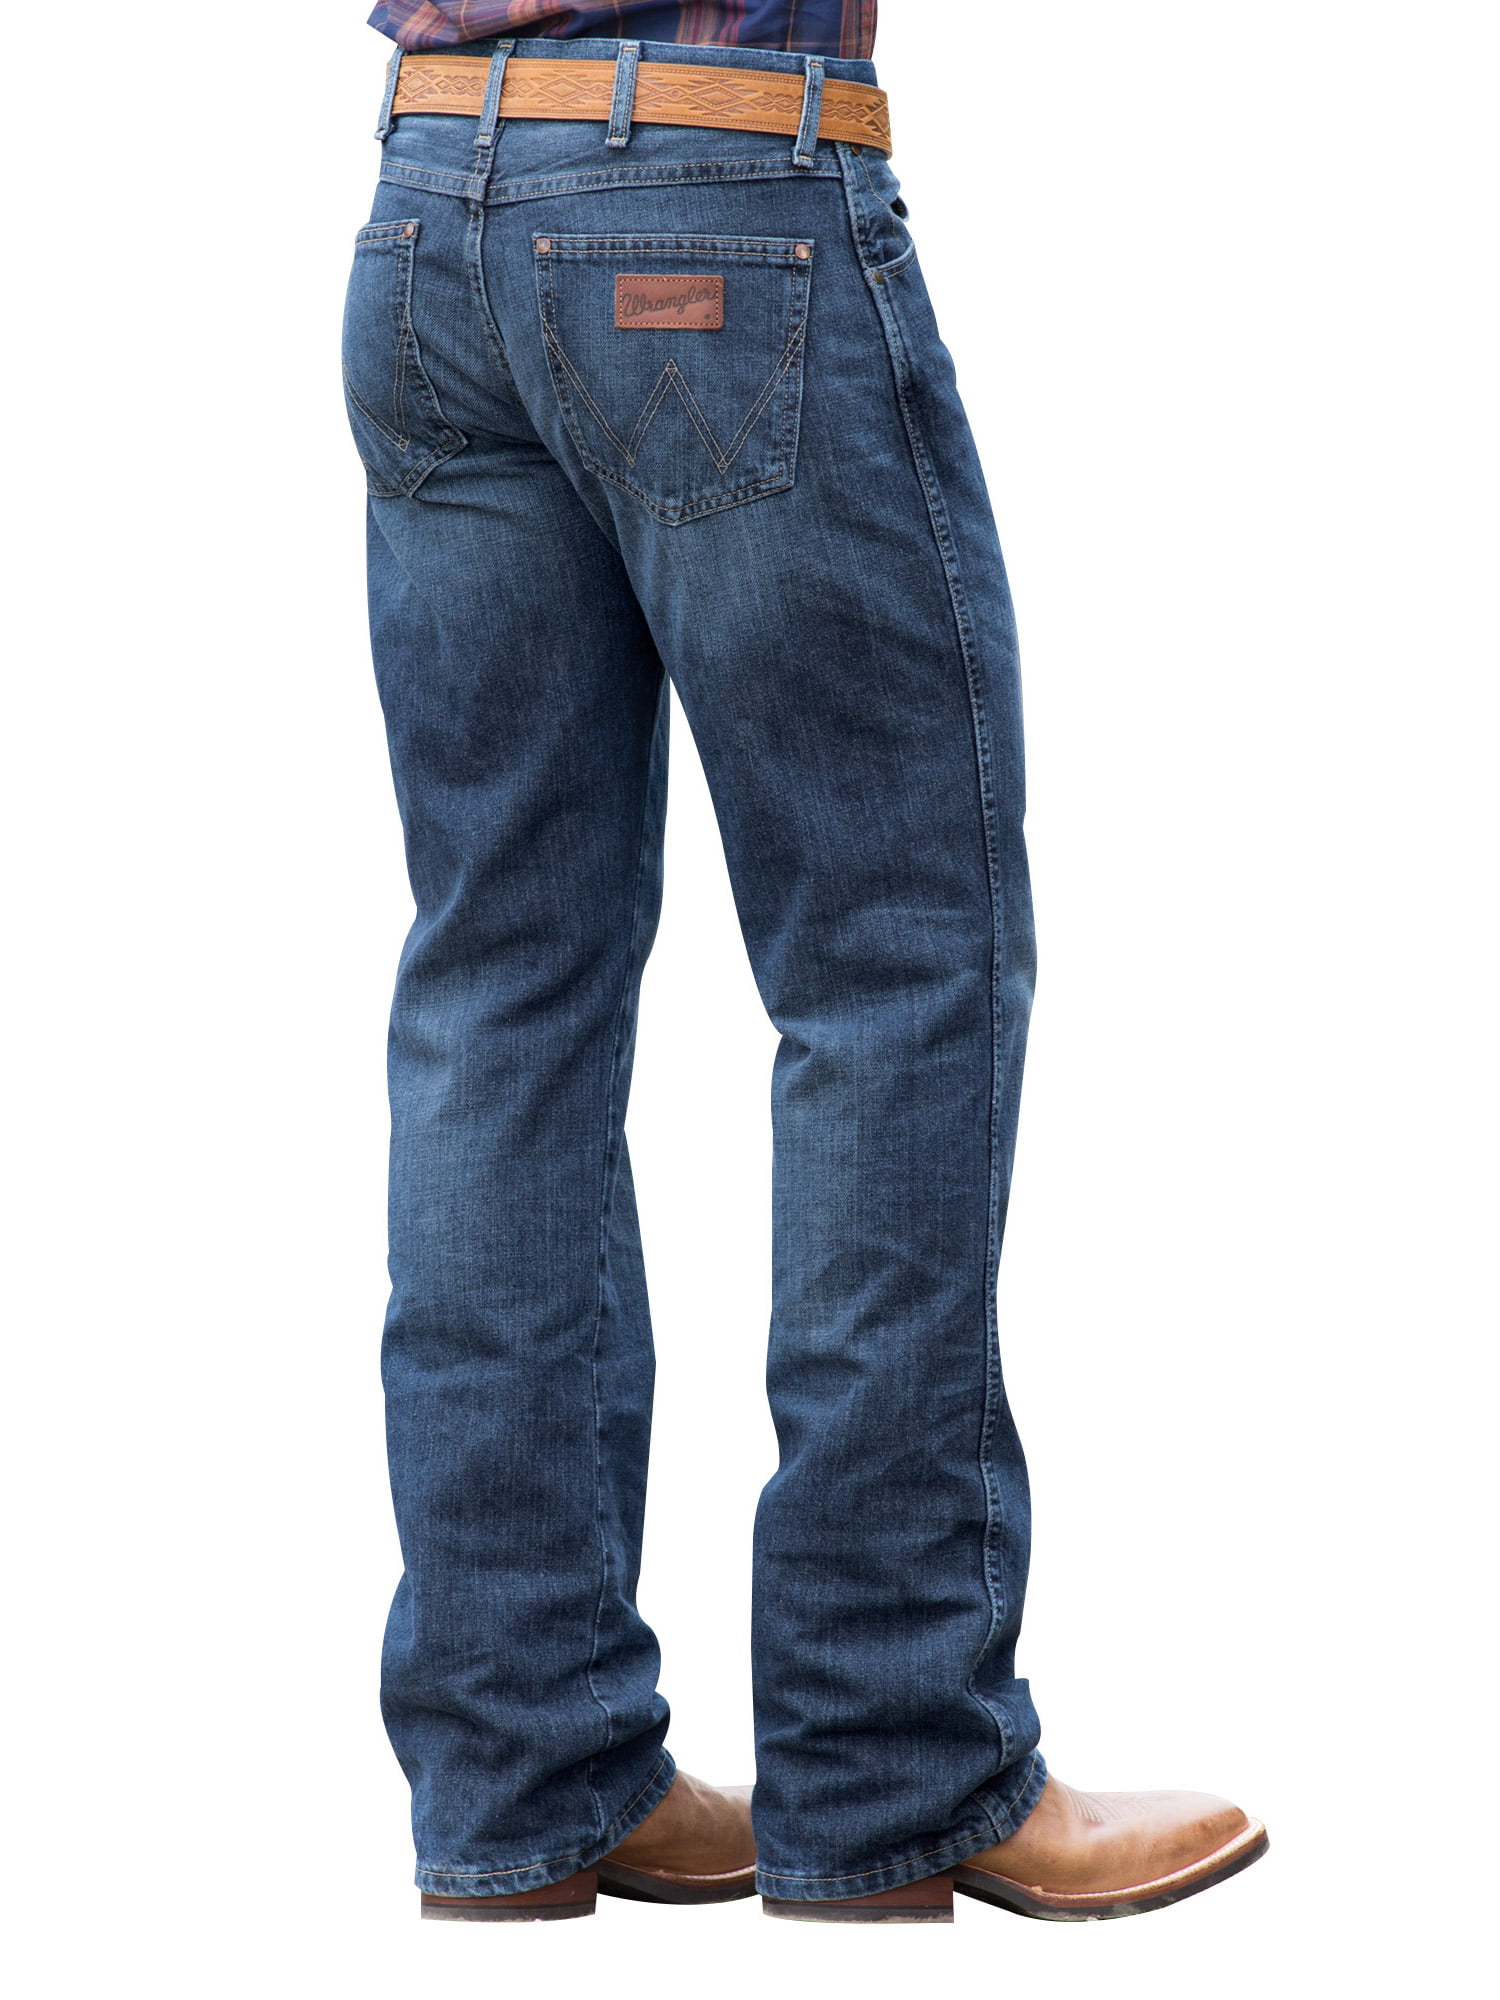 Wrangler Retro Scottsdale Slim Boot Jeans 30W x 36L - Walmart.com ...